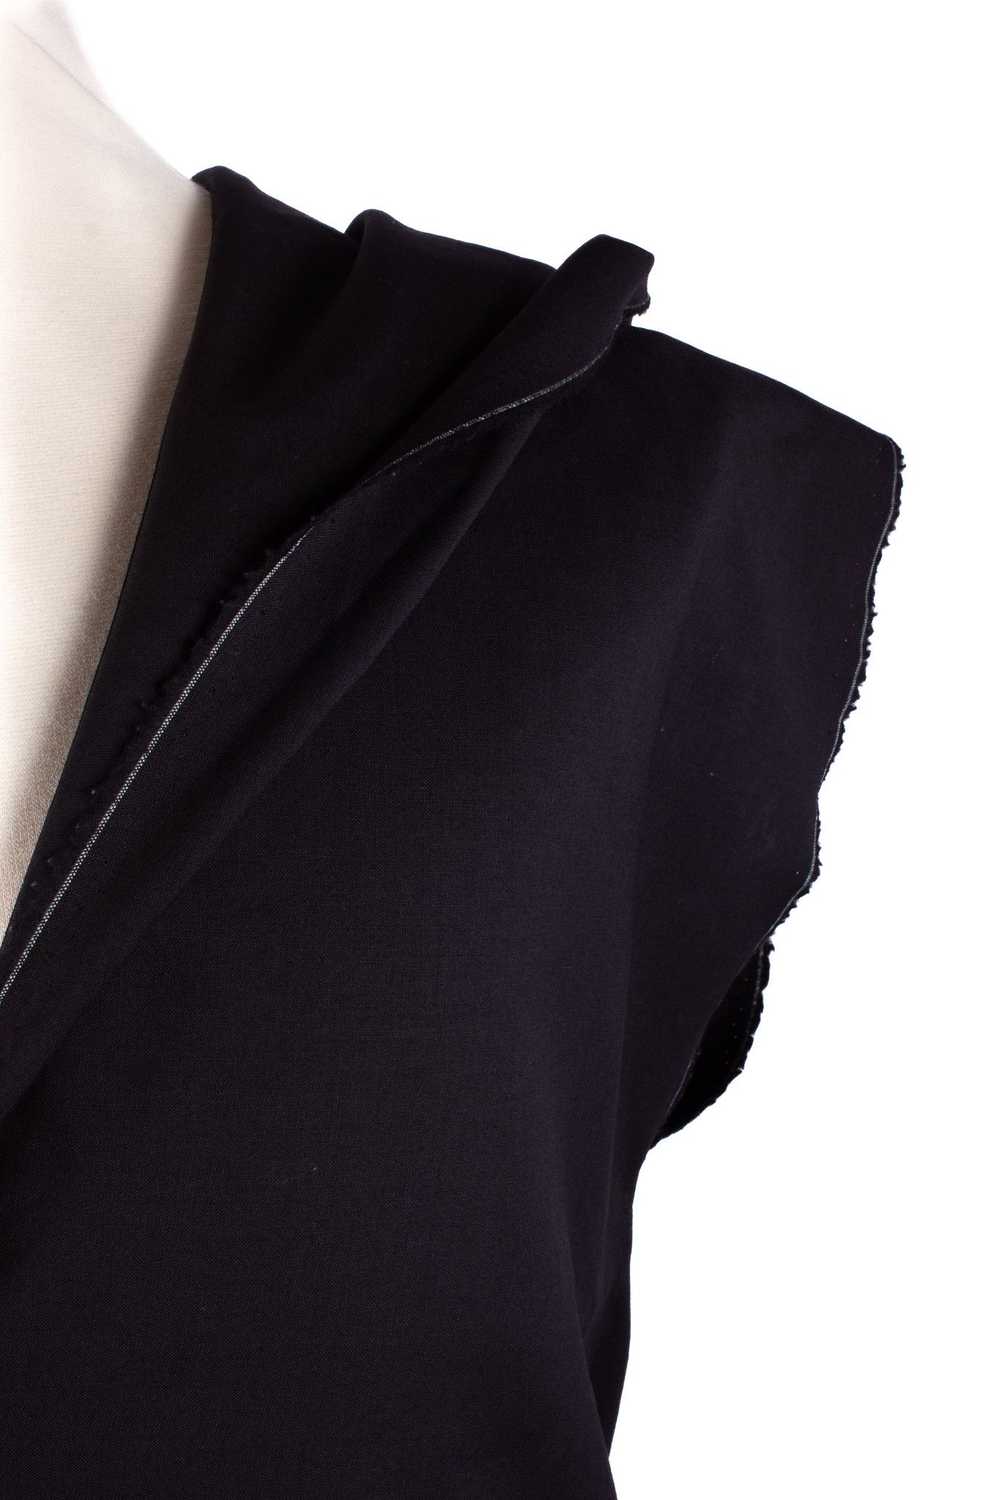 Dior DIOR HOMME BLACK WOOL DOUBLE HOODED CAP SLEE… - image 5